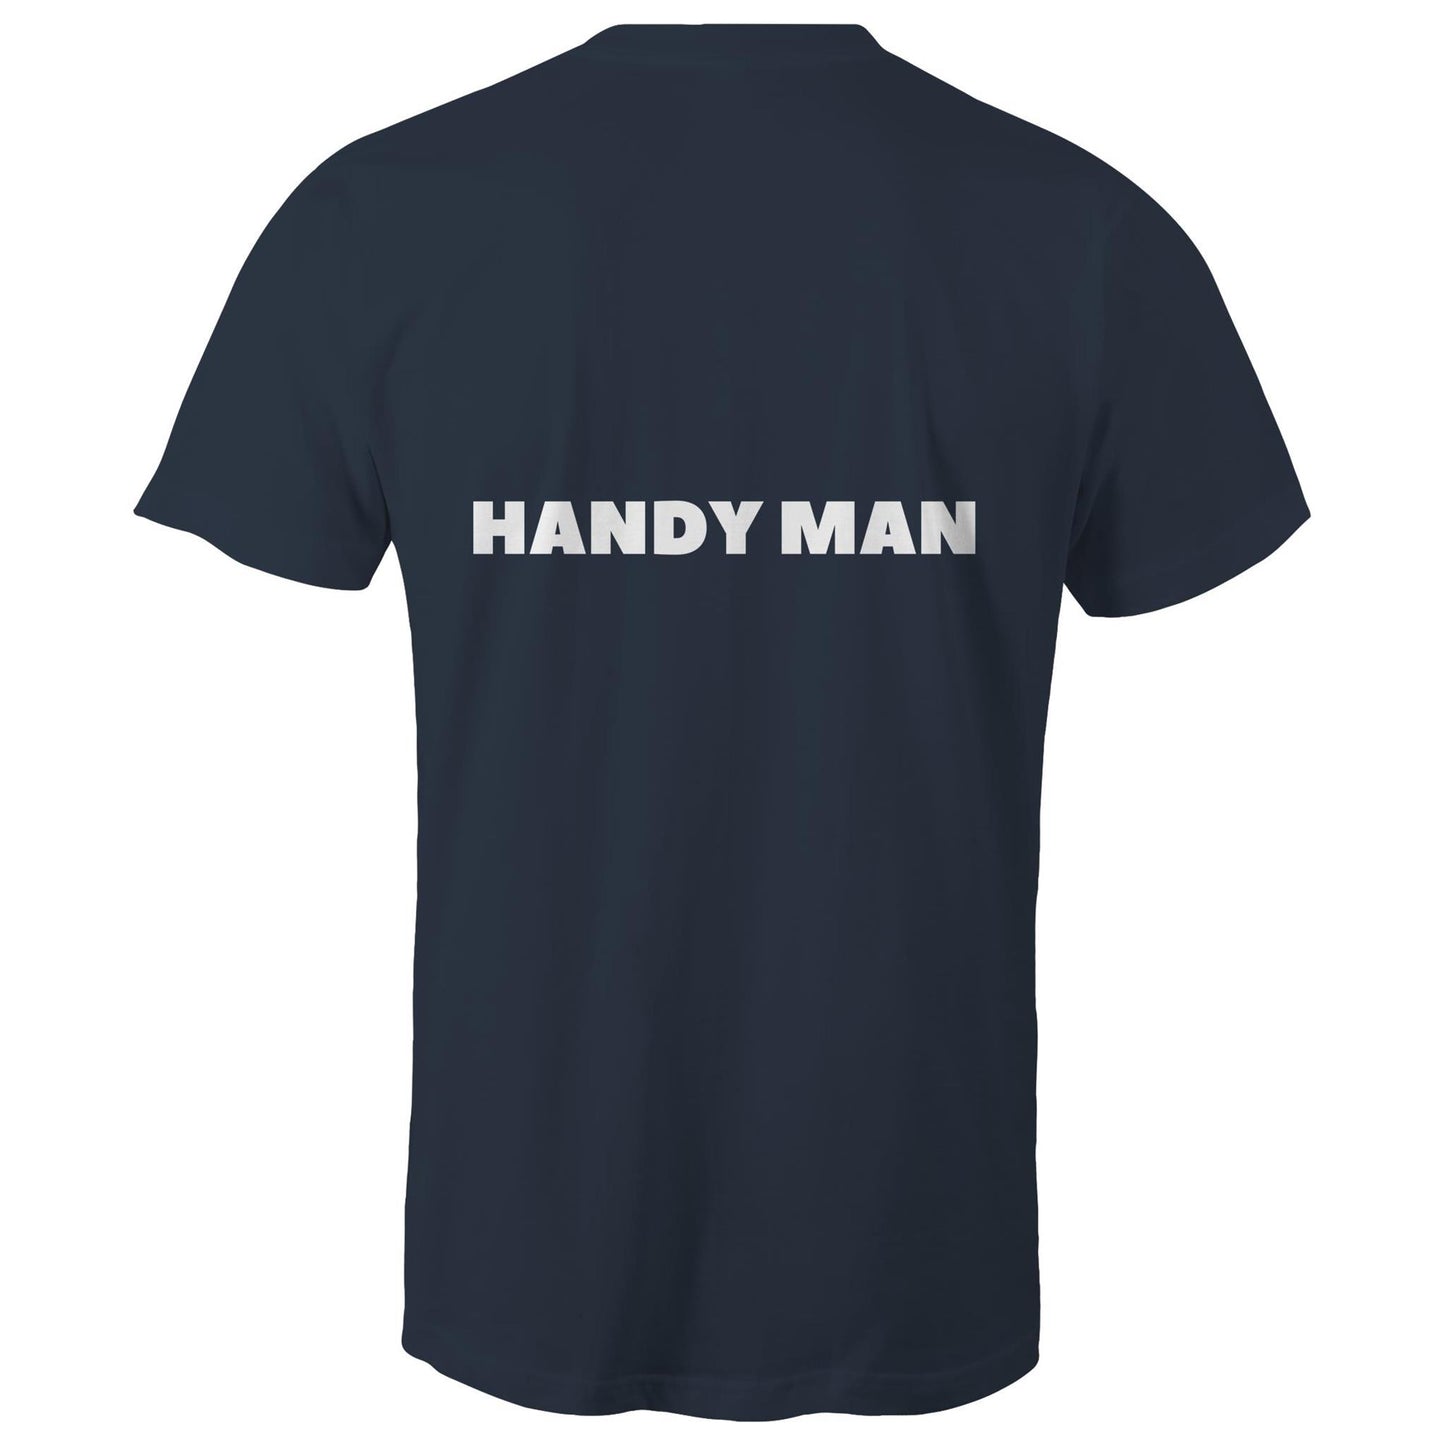 HANDY MAN - Mens T-Shirt